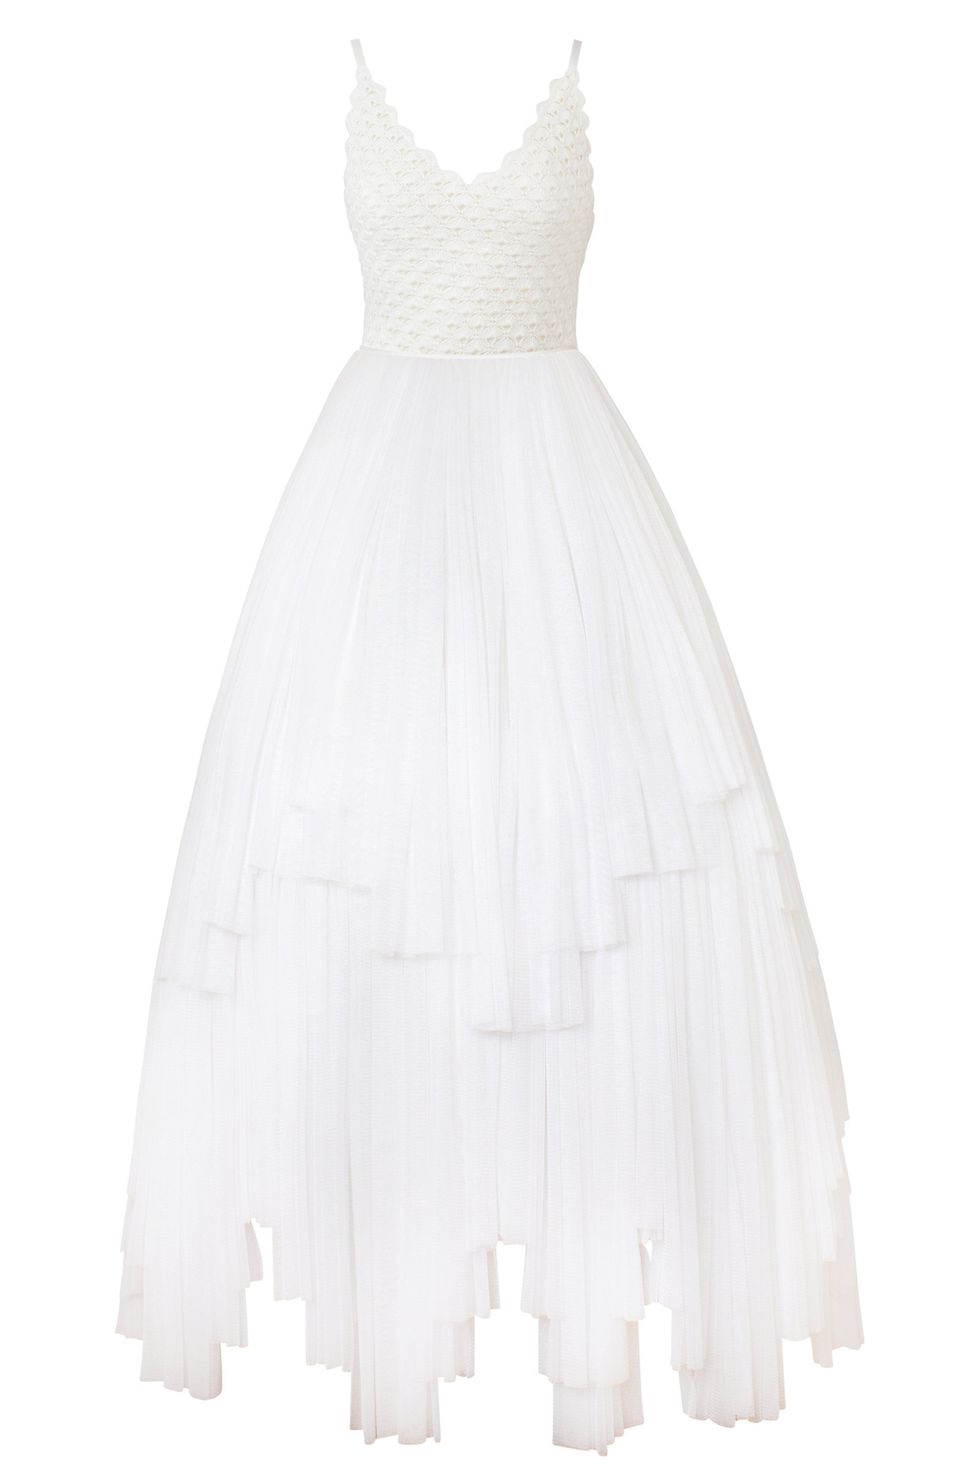 18 Stunning Non-Traditional Wedding Dresses to Wear - Wedding Dress ...